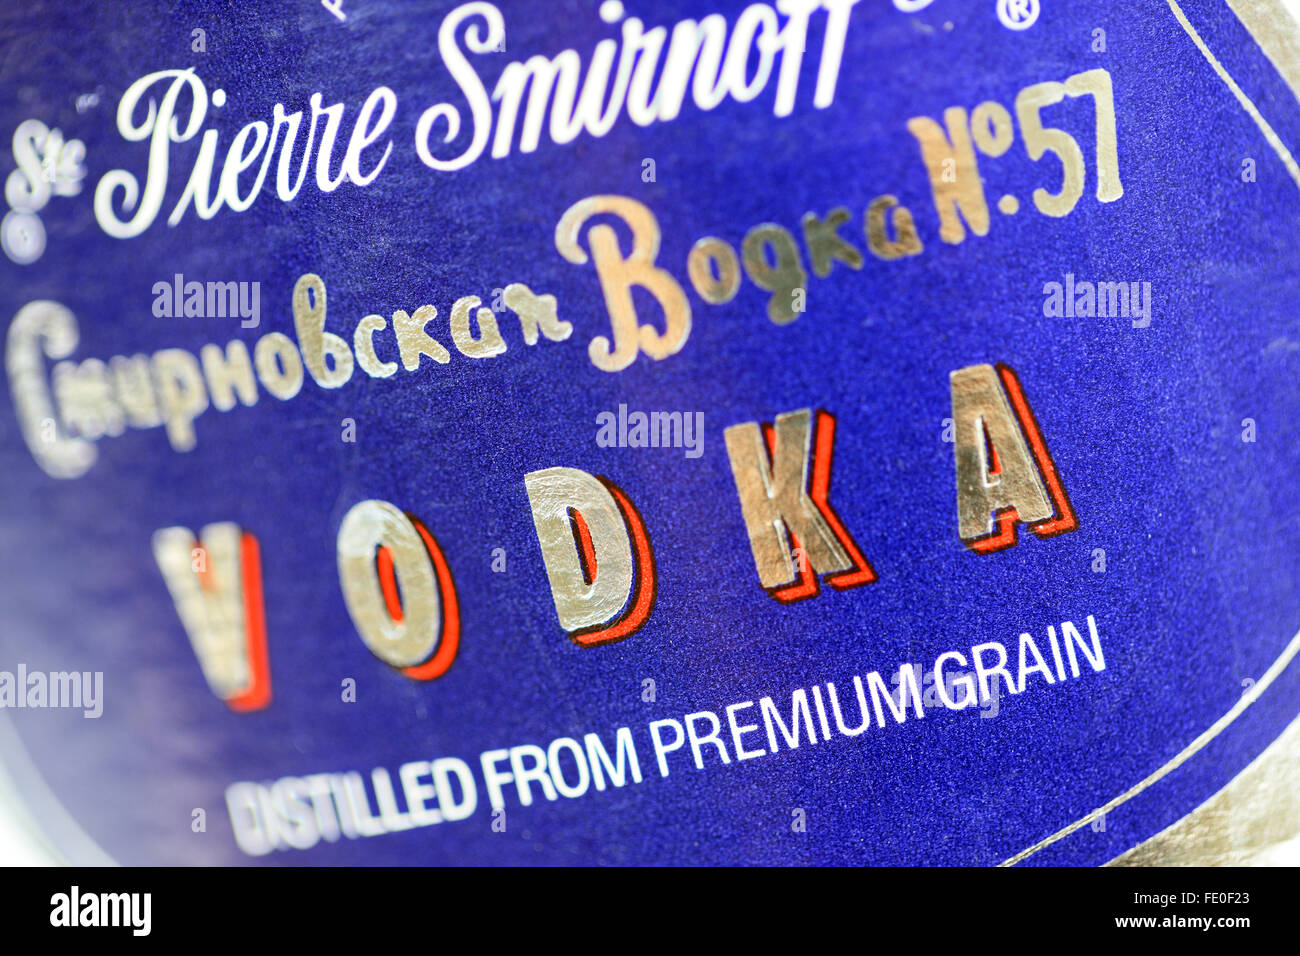 Alamy label Smirnoff vodka Photo Blue Stock -